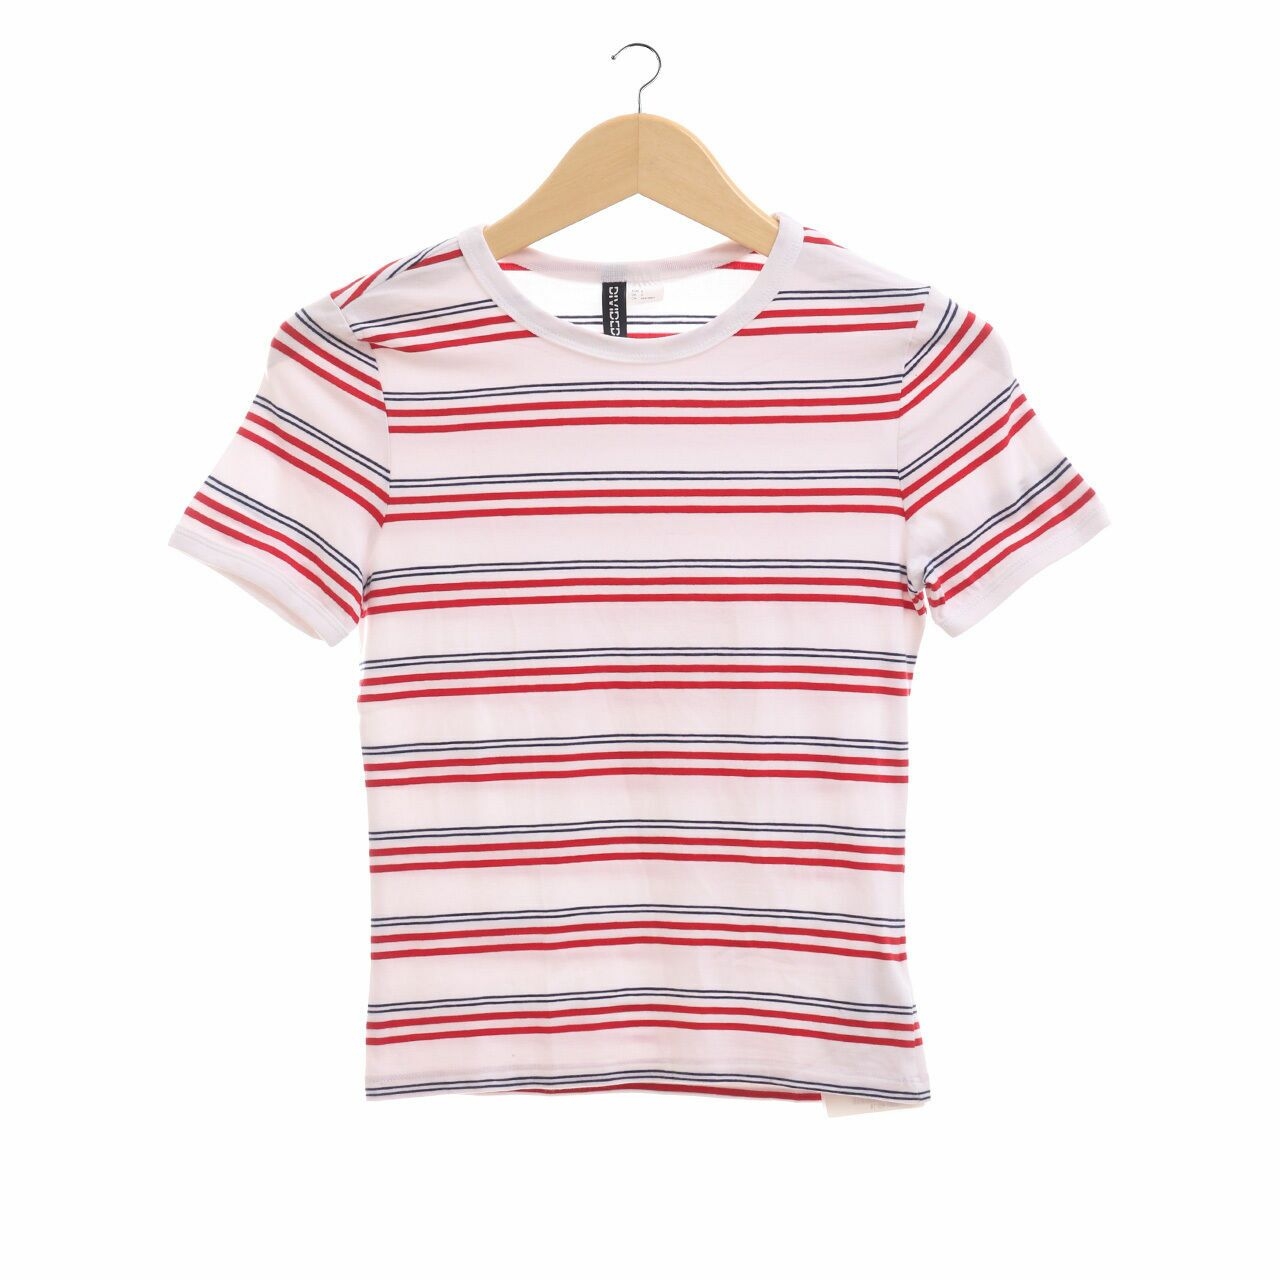 H&M Red & White Stripes T-Shirt